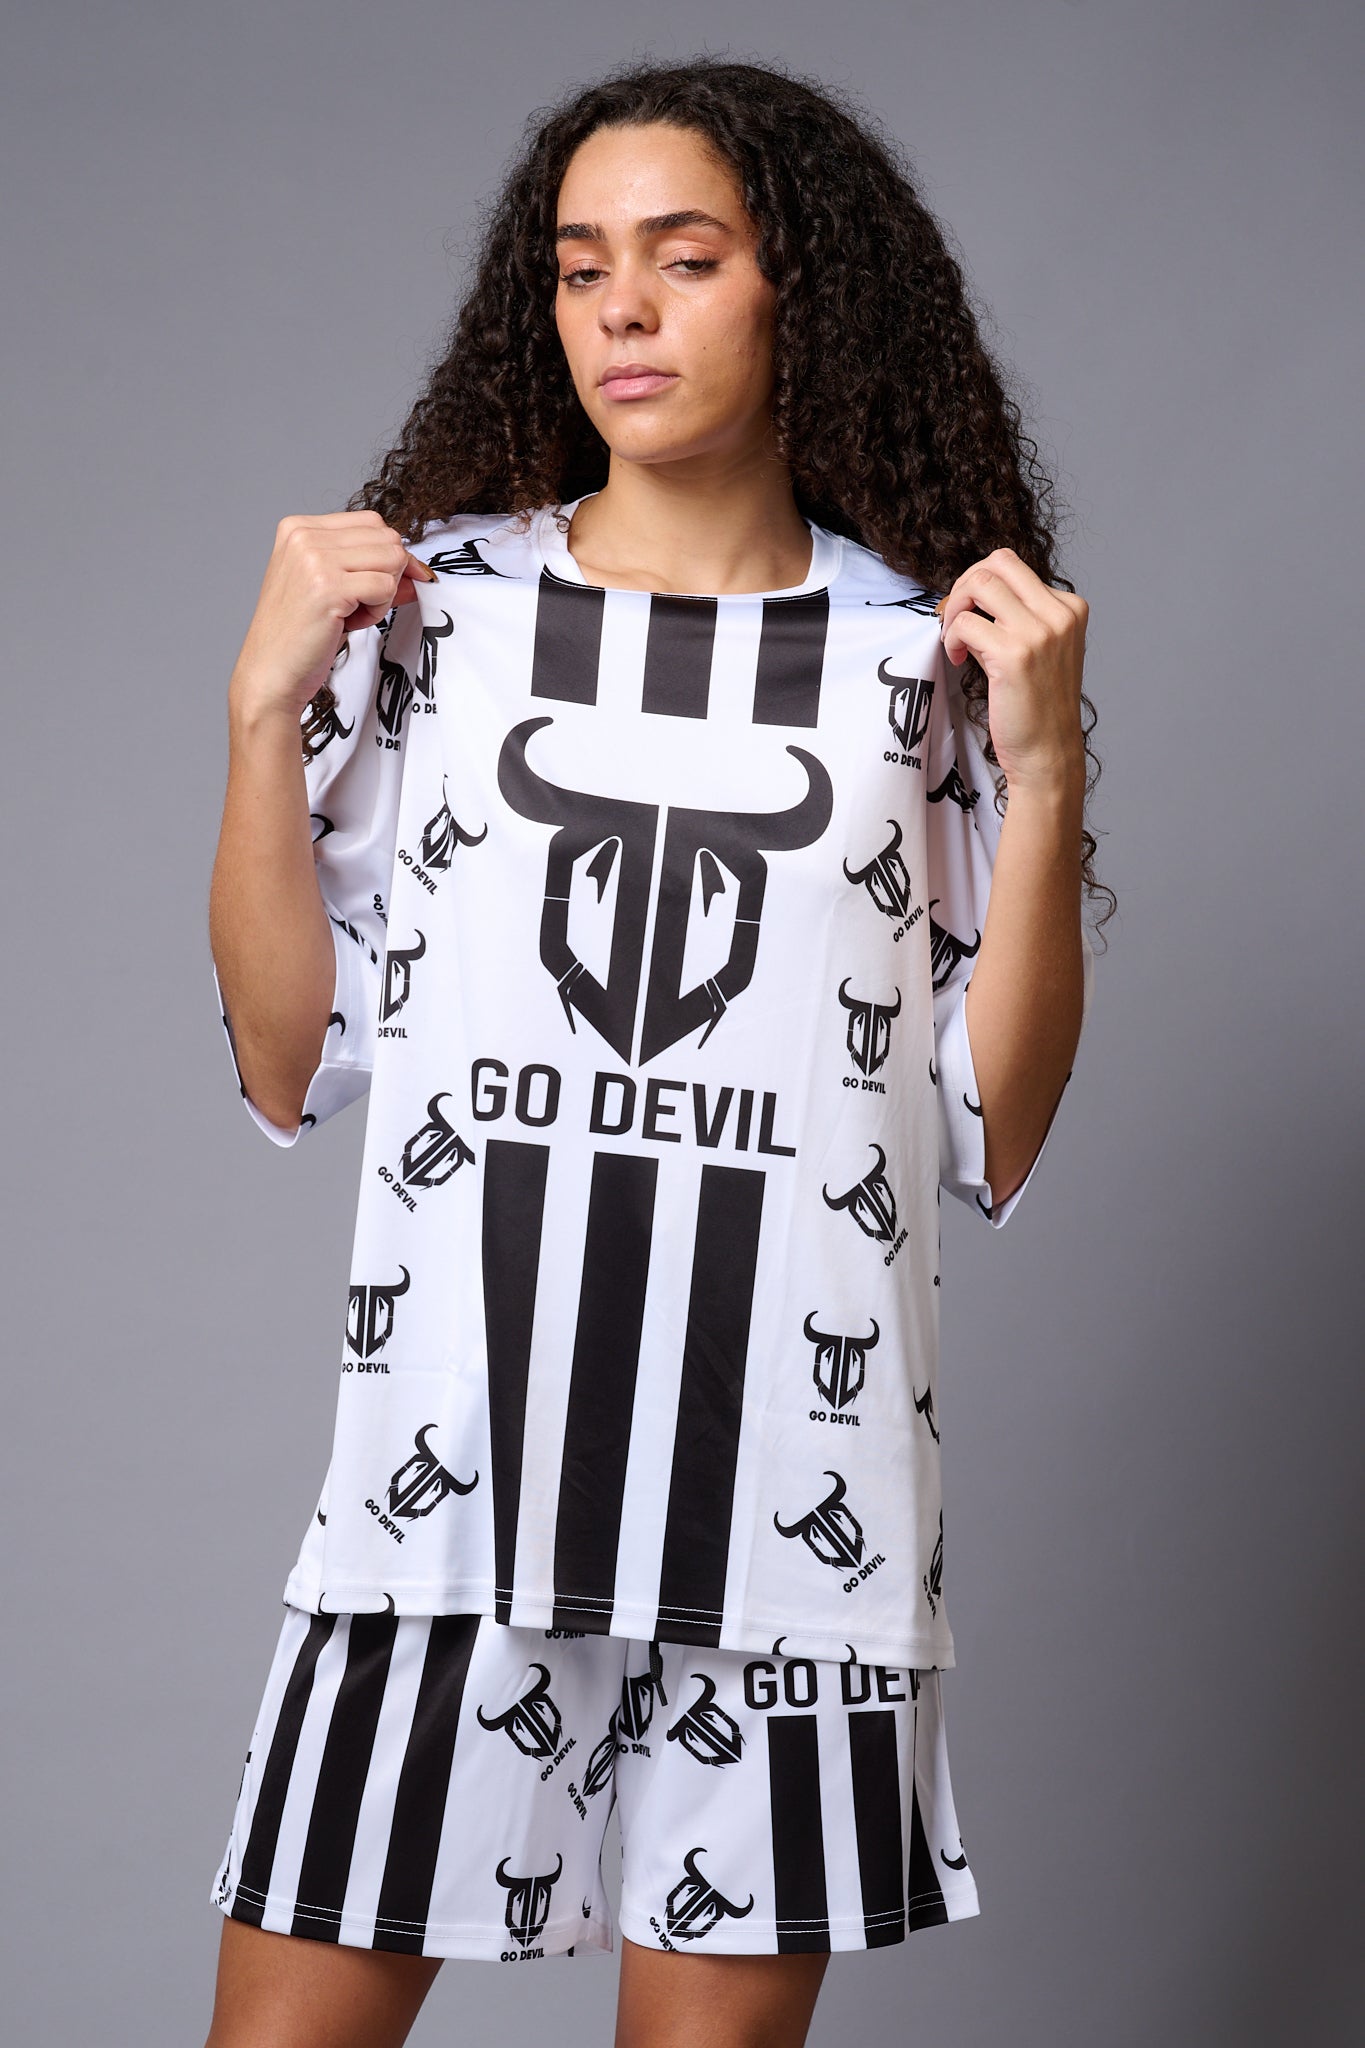 Go Devil with Logo (in Black) Printed White Co-ord Set for Women - Go Devil